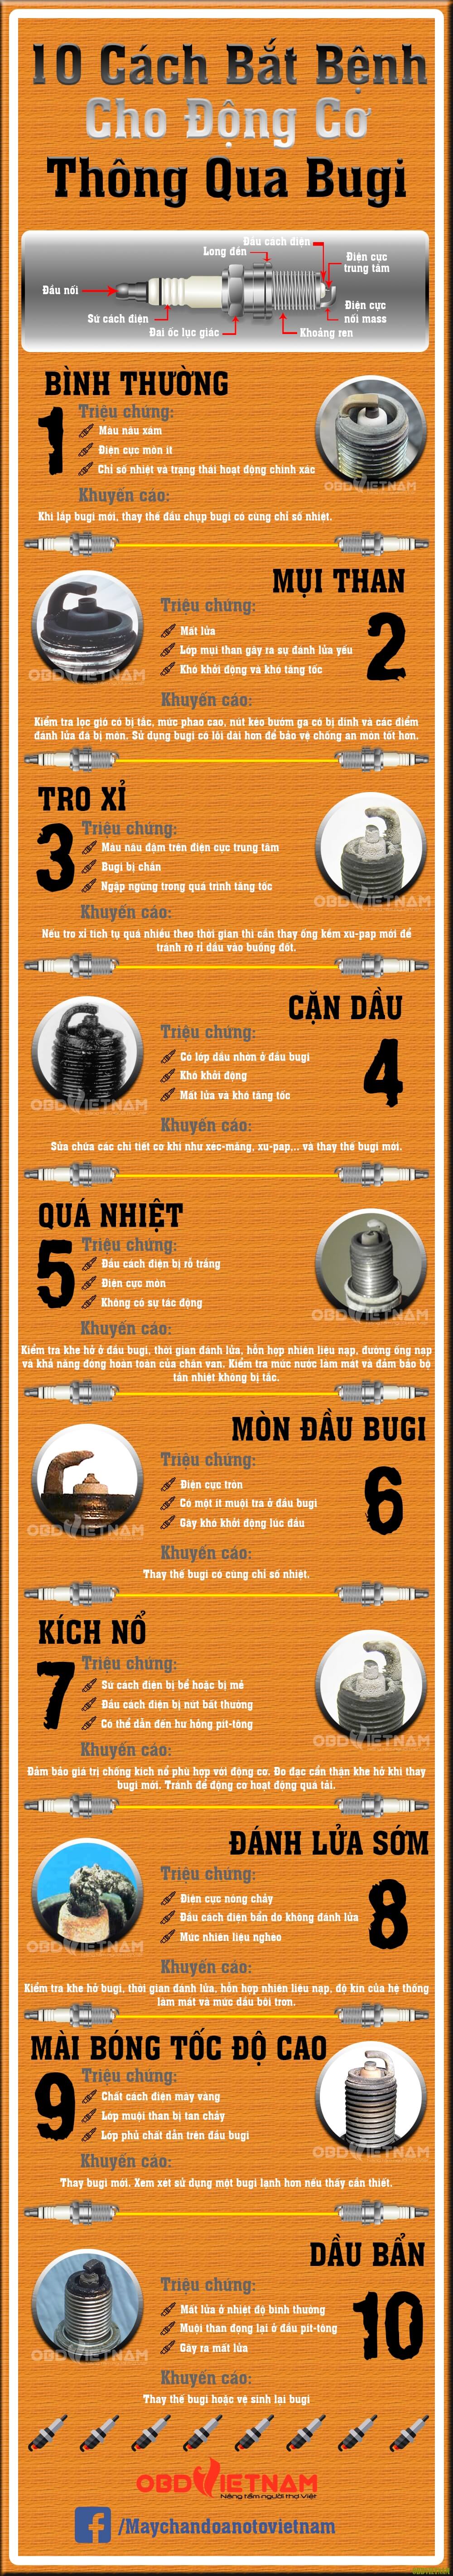 infographic-10-cach-bat-benh-cho-dong-co-o-to-thong-qua-bugi-obdvietnam-1